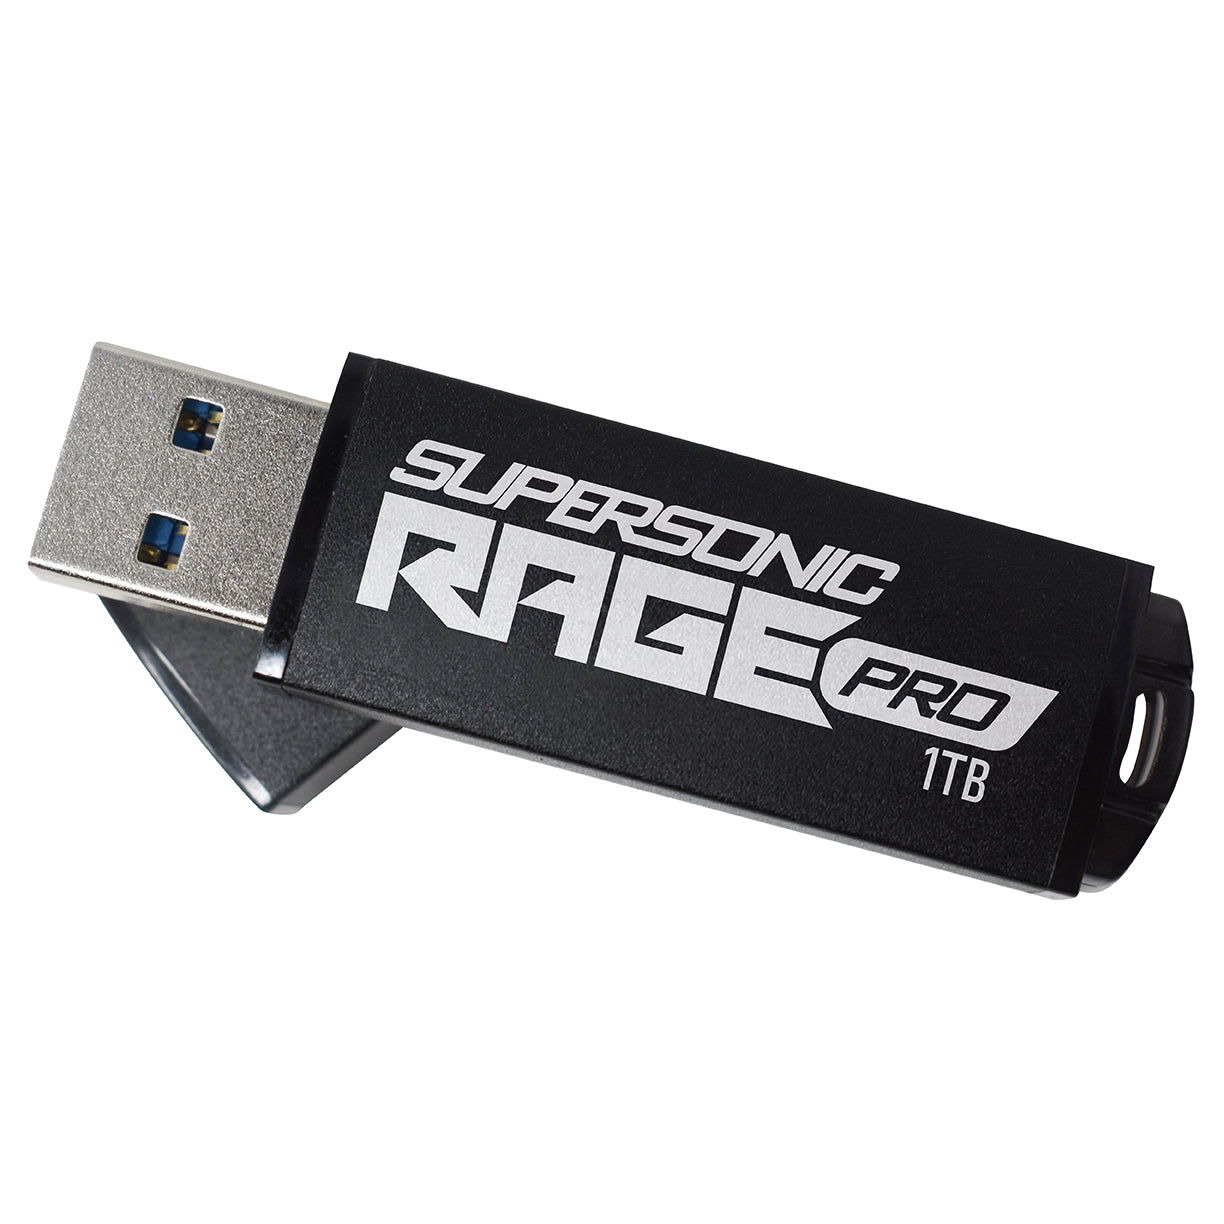 Clé USB PATRIOT Rage Prime USB 3.2 / 500 Go